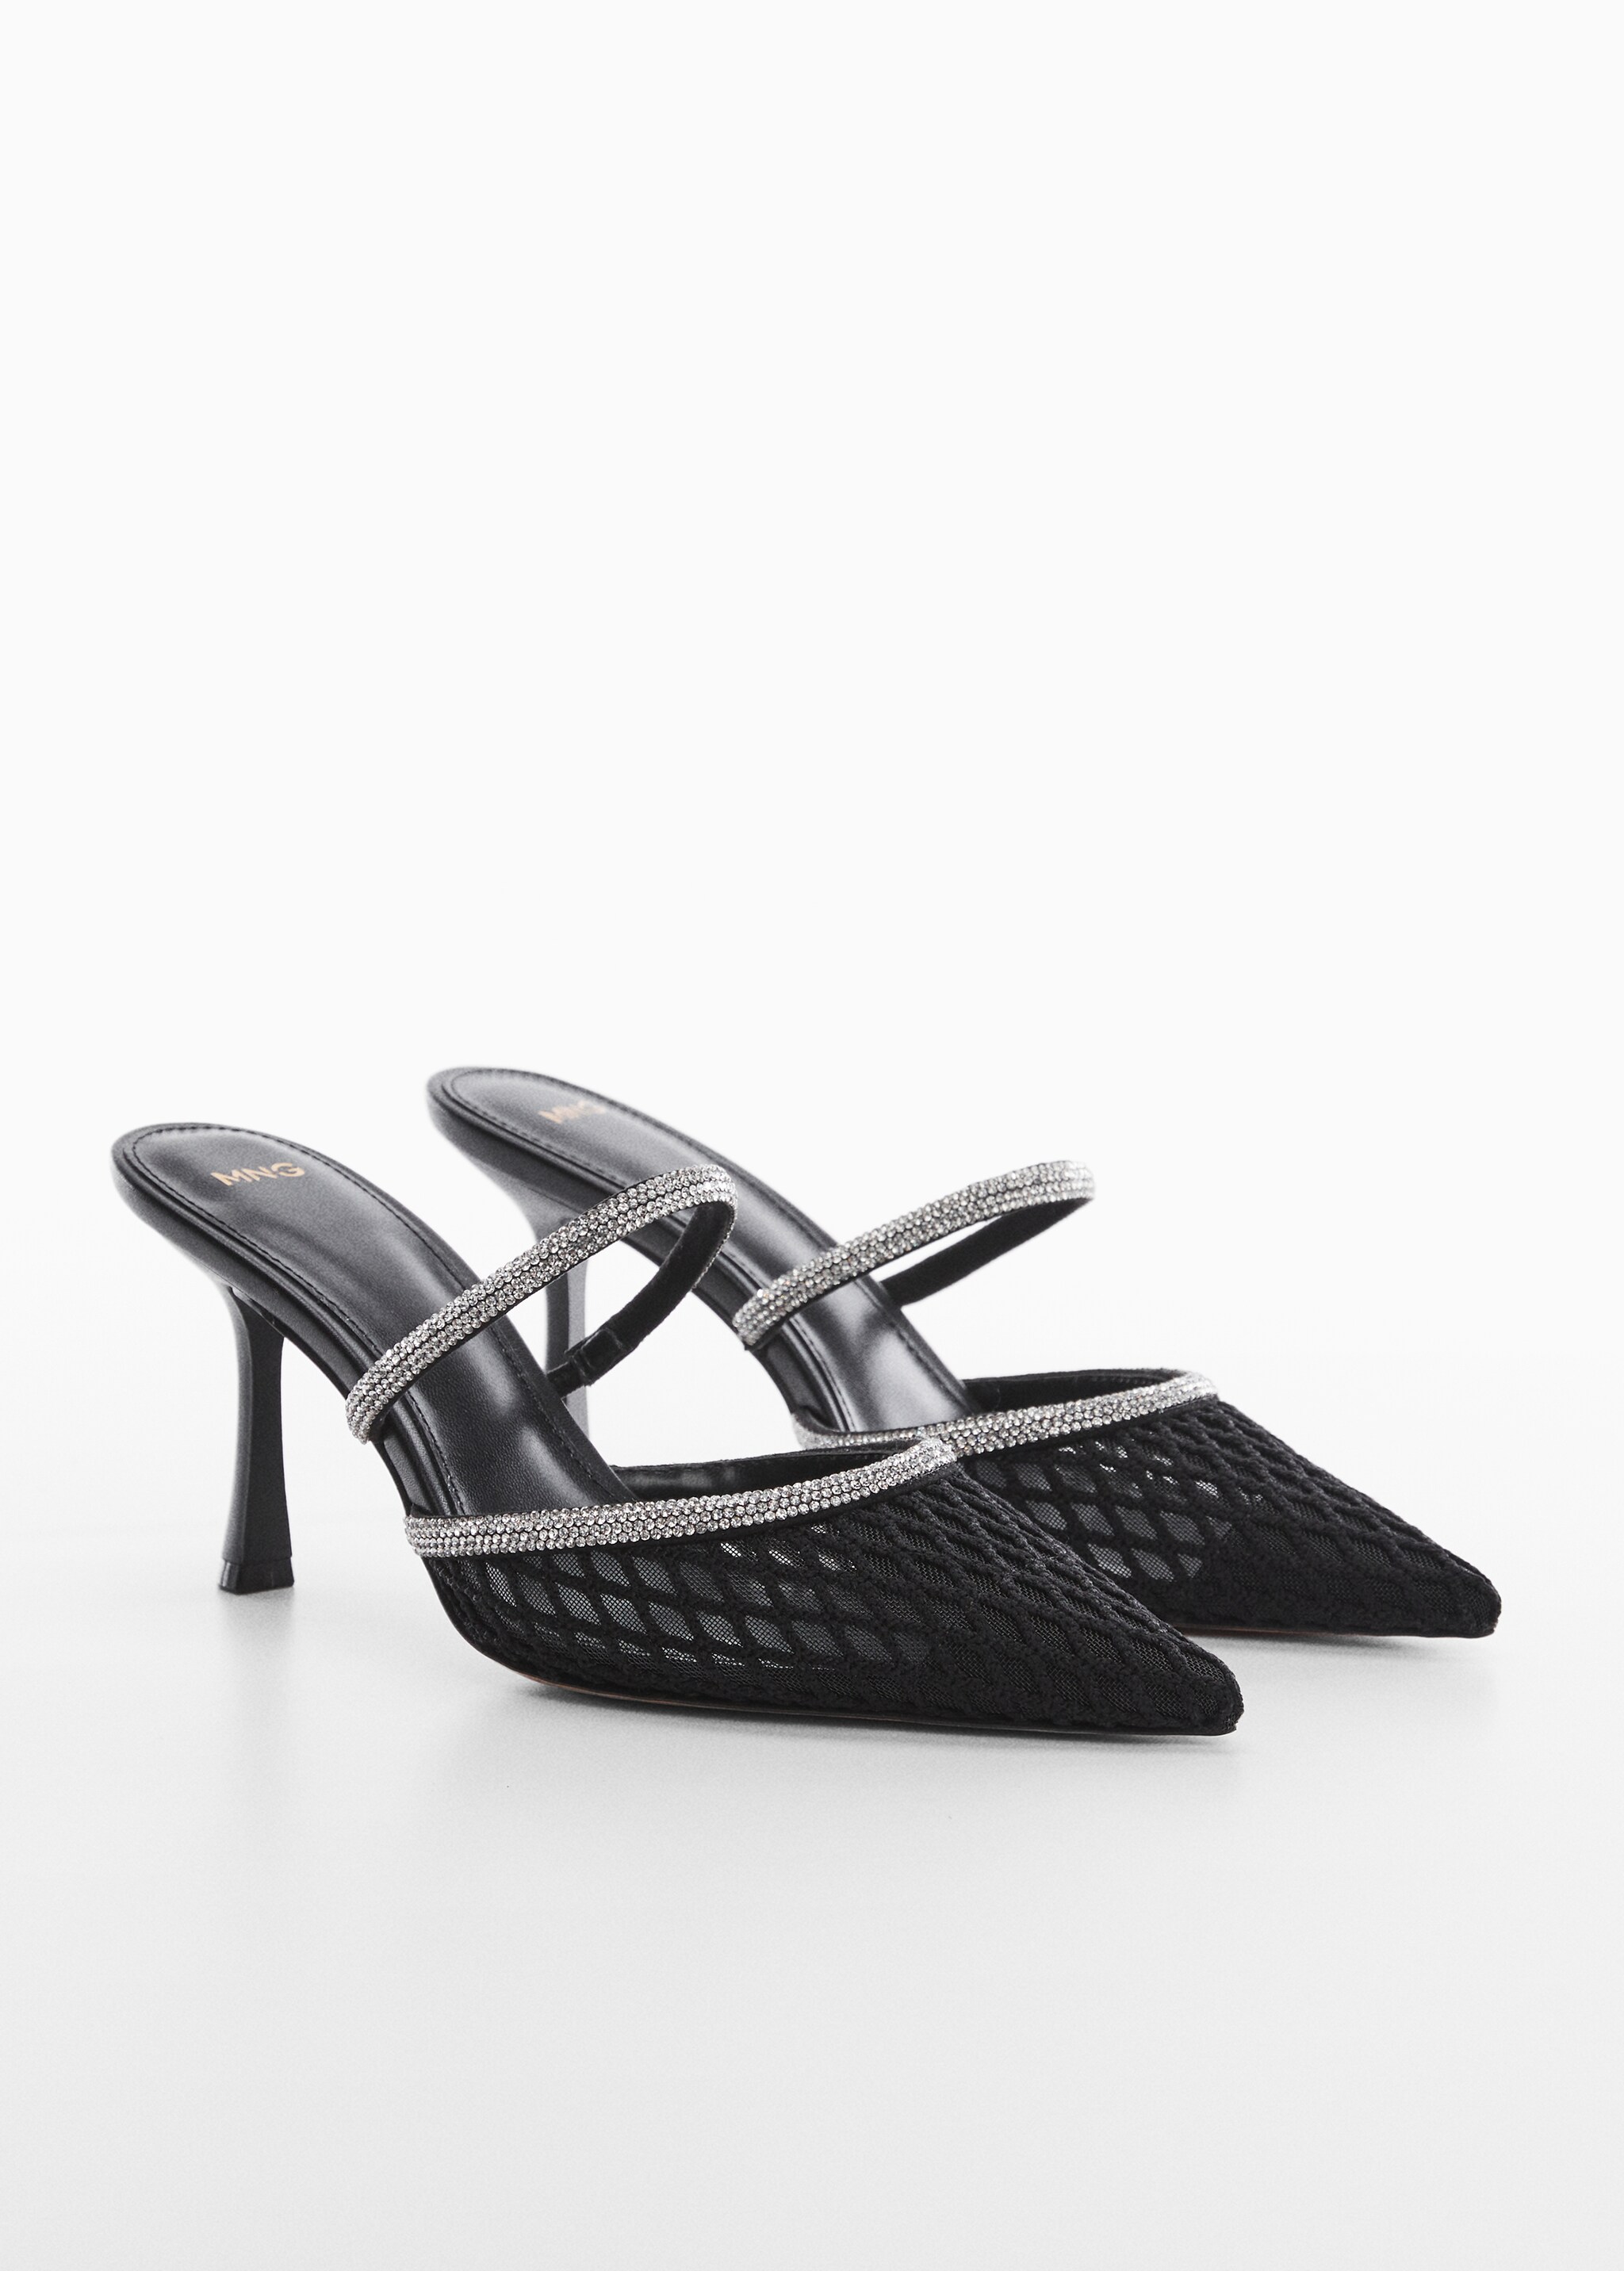 Rhinestone heeled shoes - Medium plane